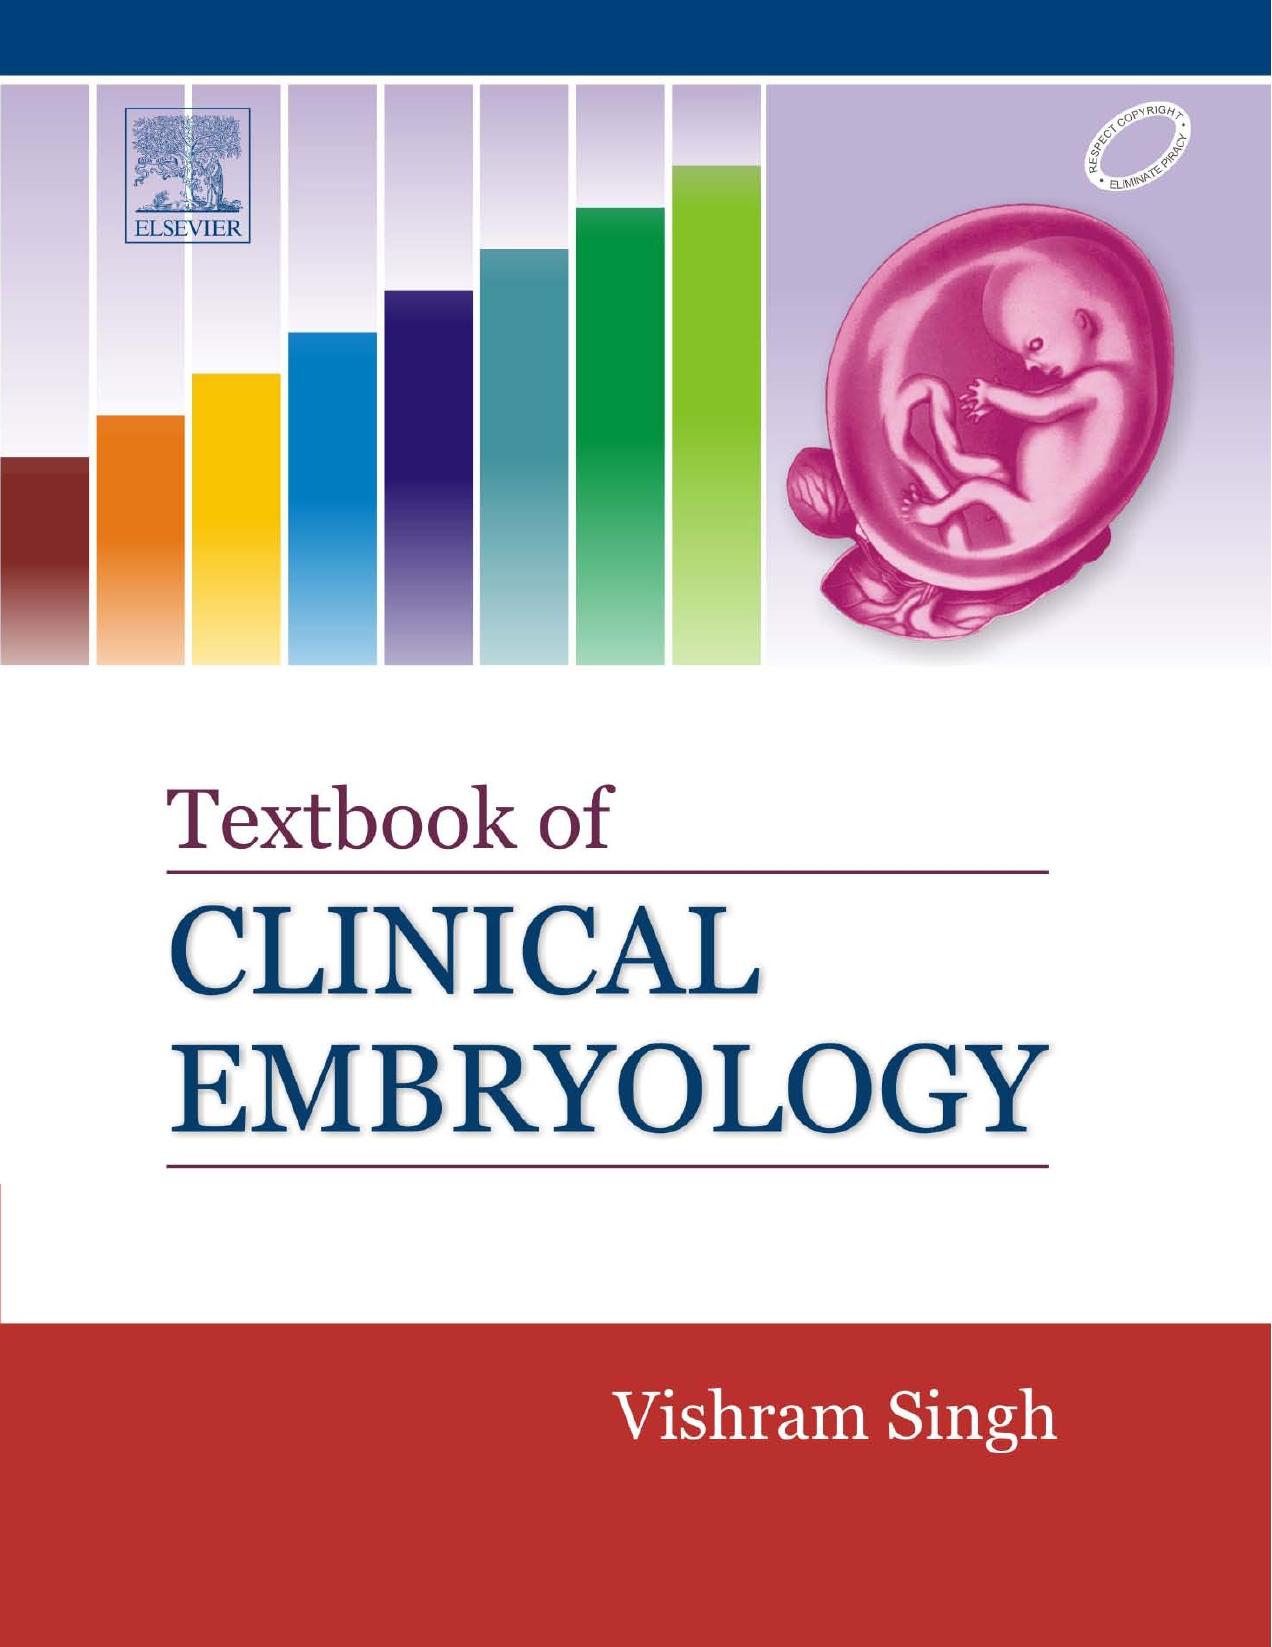 Textbook of Clinical Embryology Vishram Singh 2014